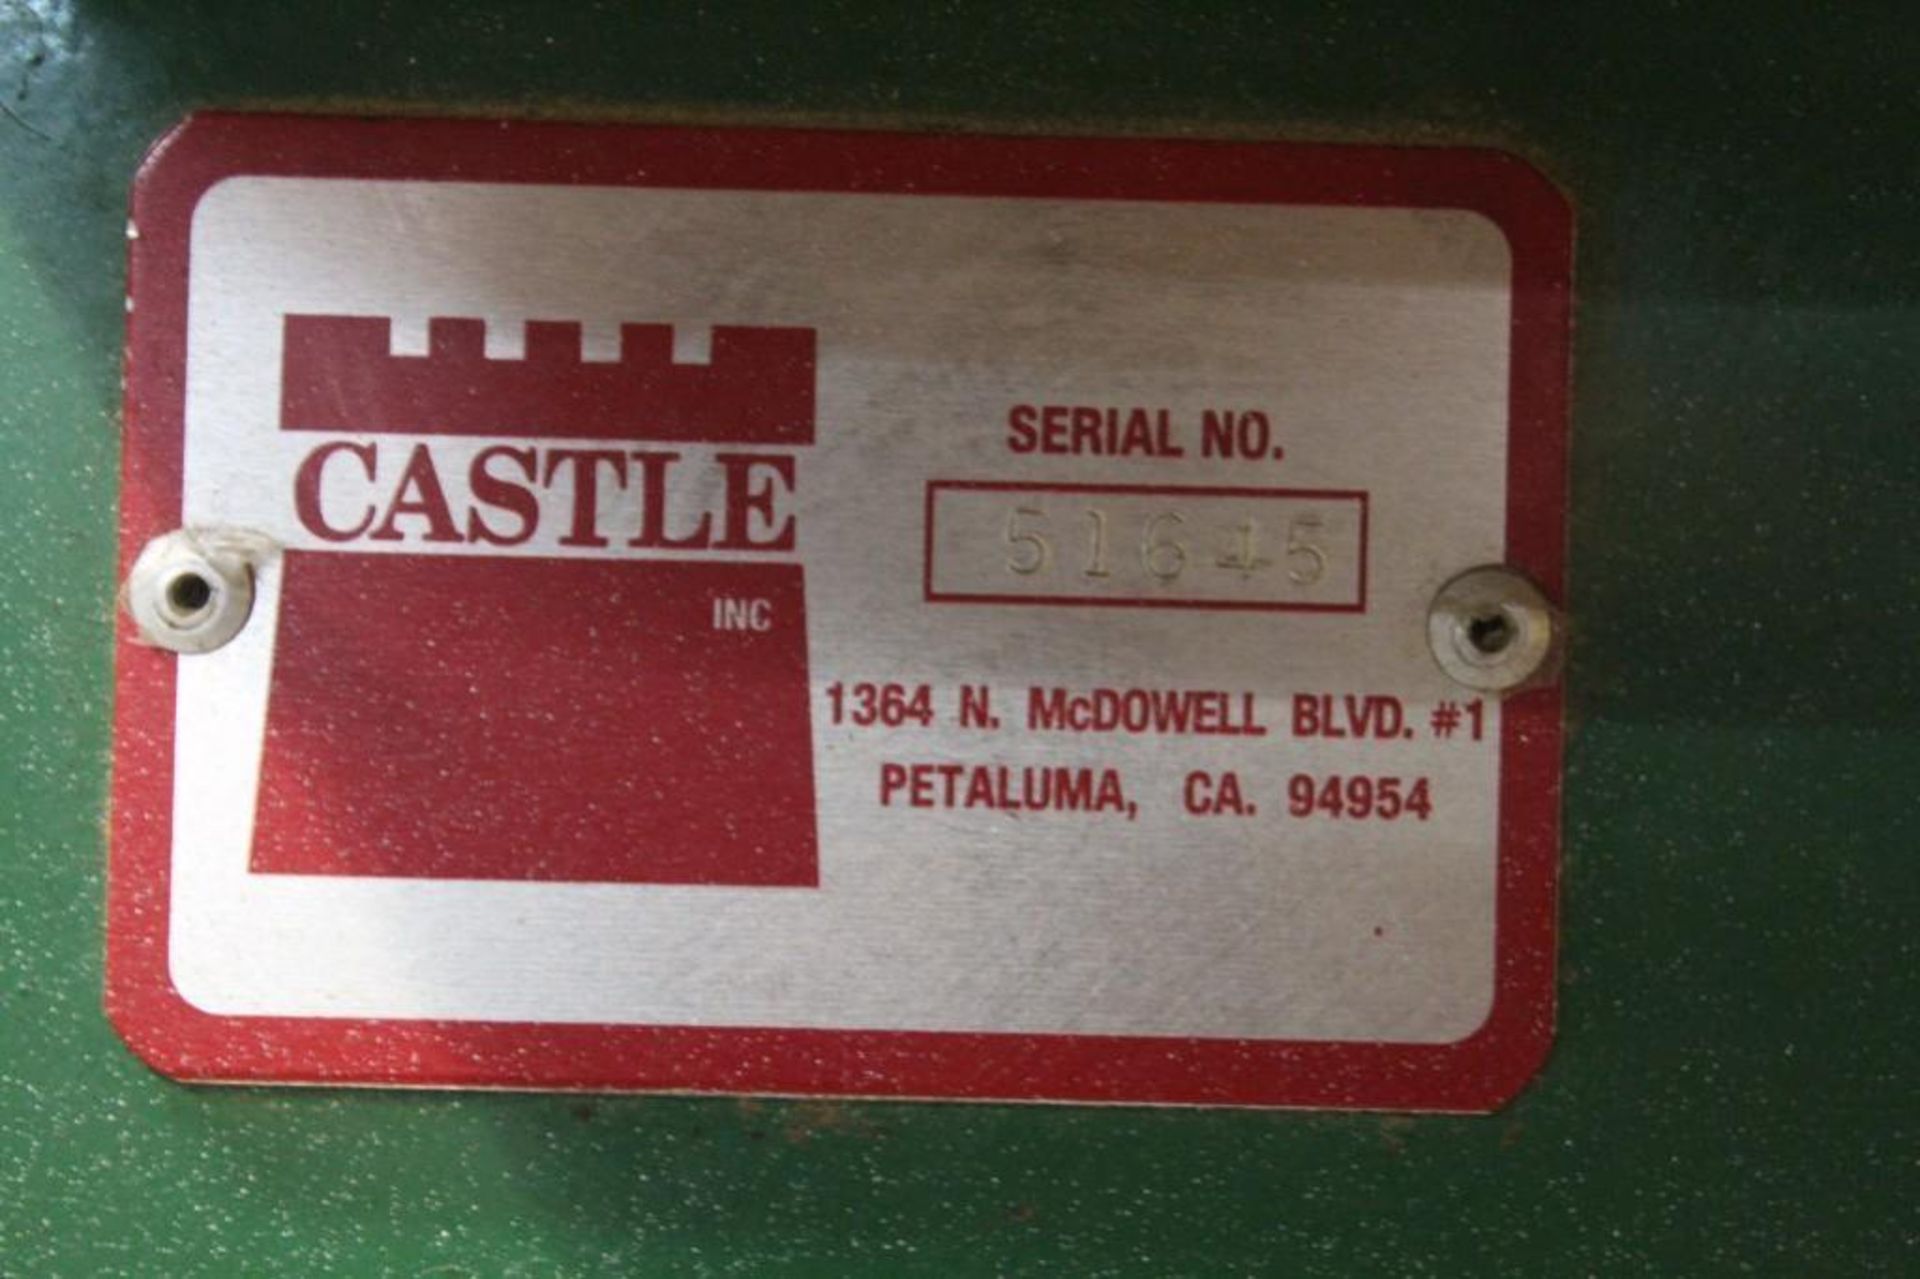 Castle model TSM - 21 screw pocket machine Serial no. 51645 115v/1ph - Image 9 of 9